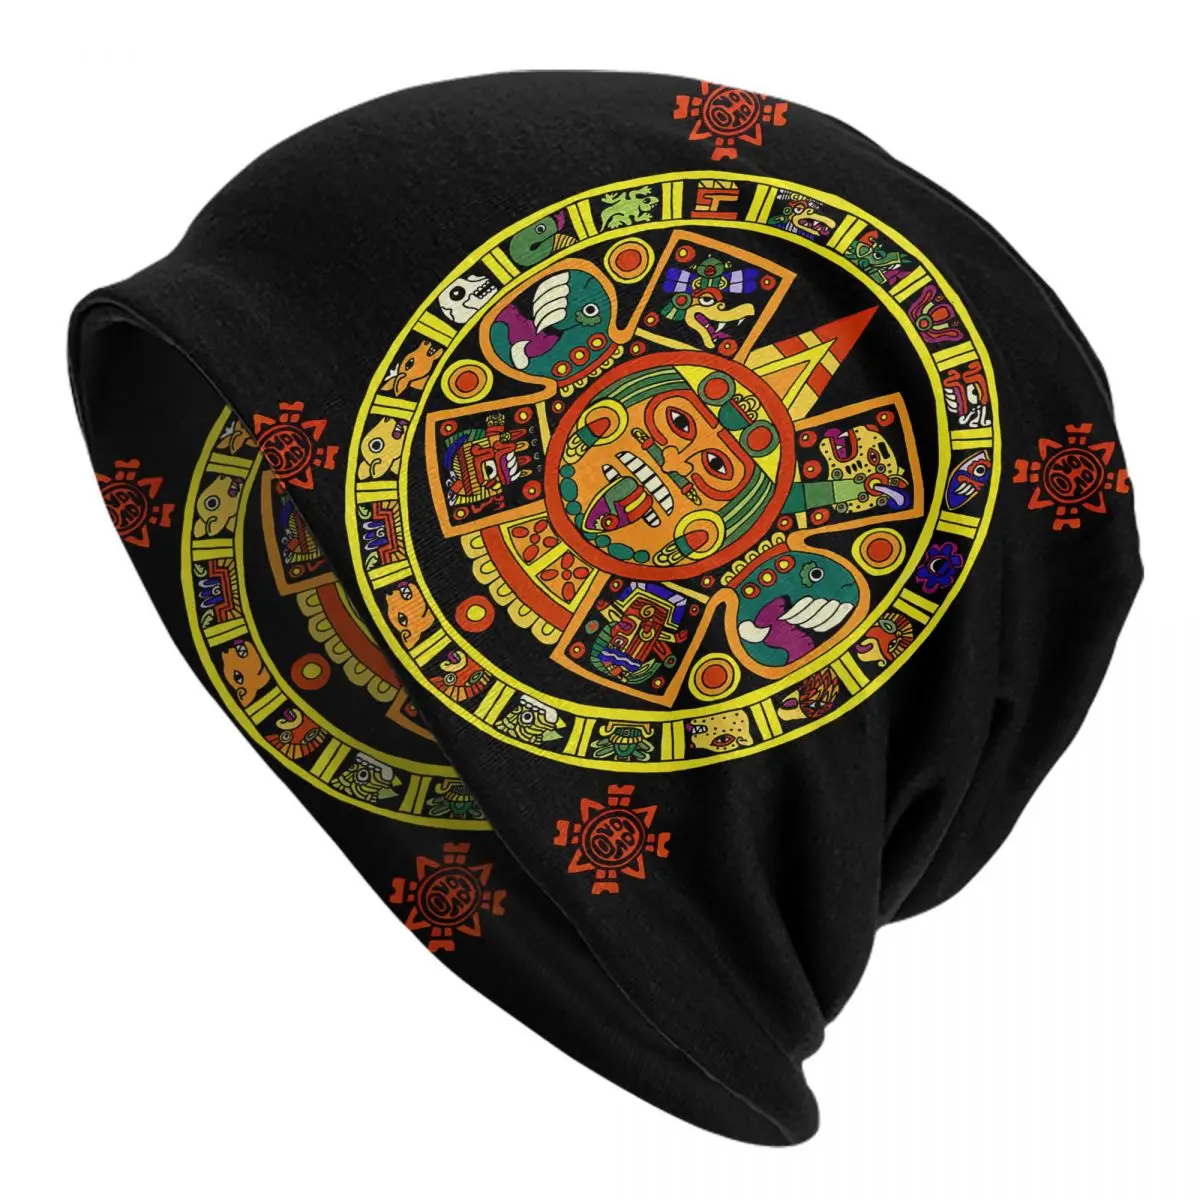 Mandala Azteca Adult Men's Women's Knit Hat Keep warm winter Funny knitted hat